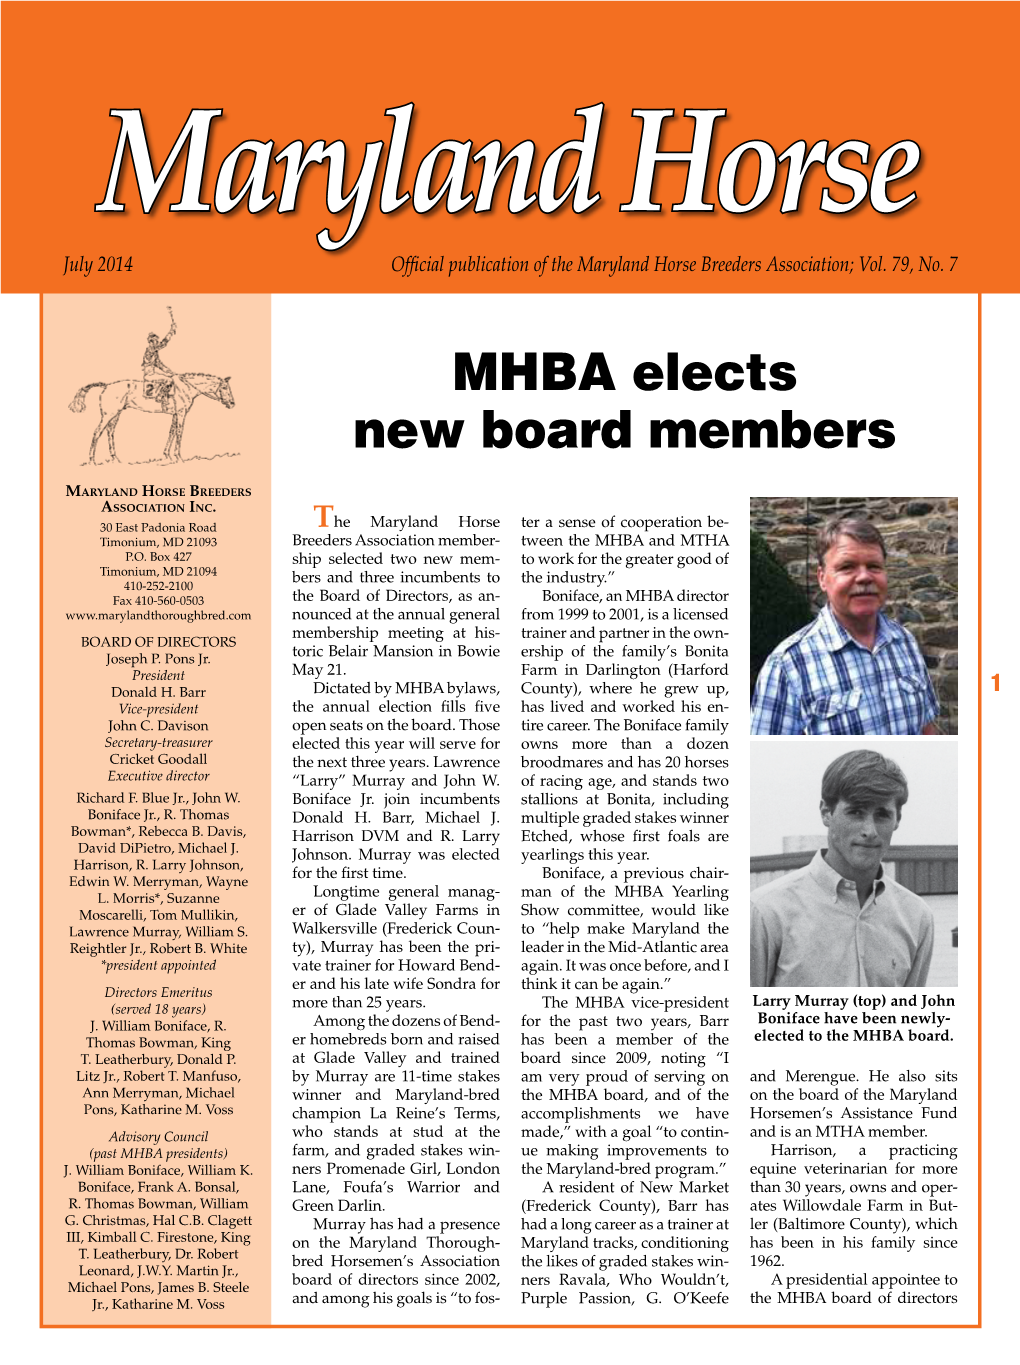 MHBA Elects New Board Members